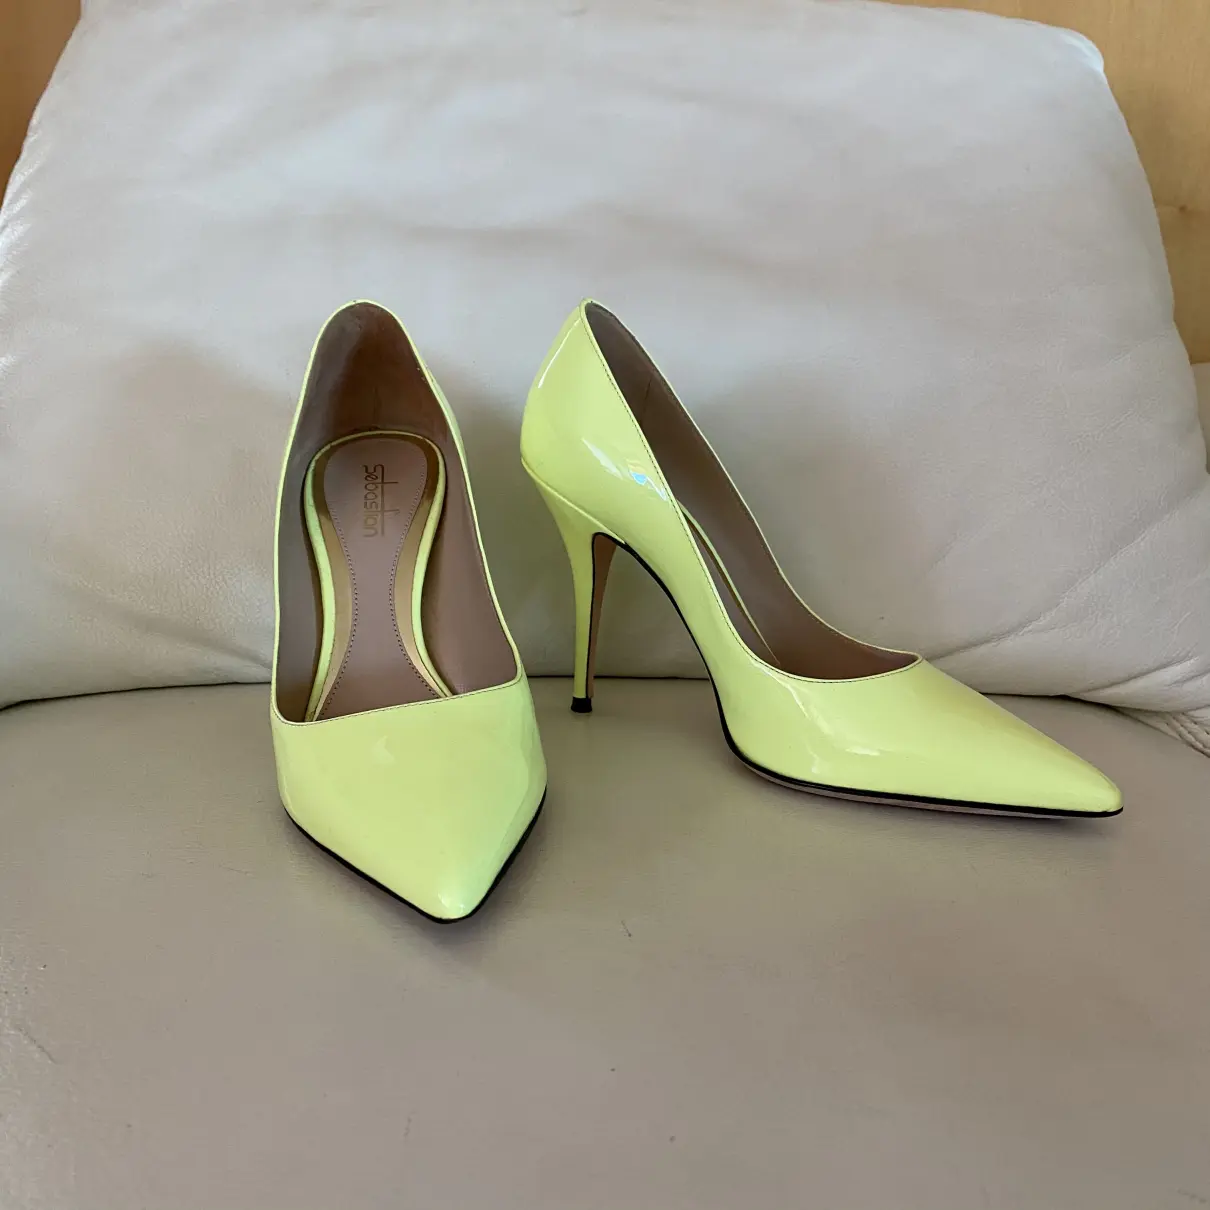 Patent leather heels Sebastian Milano